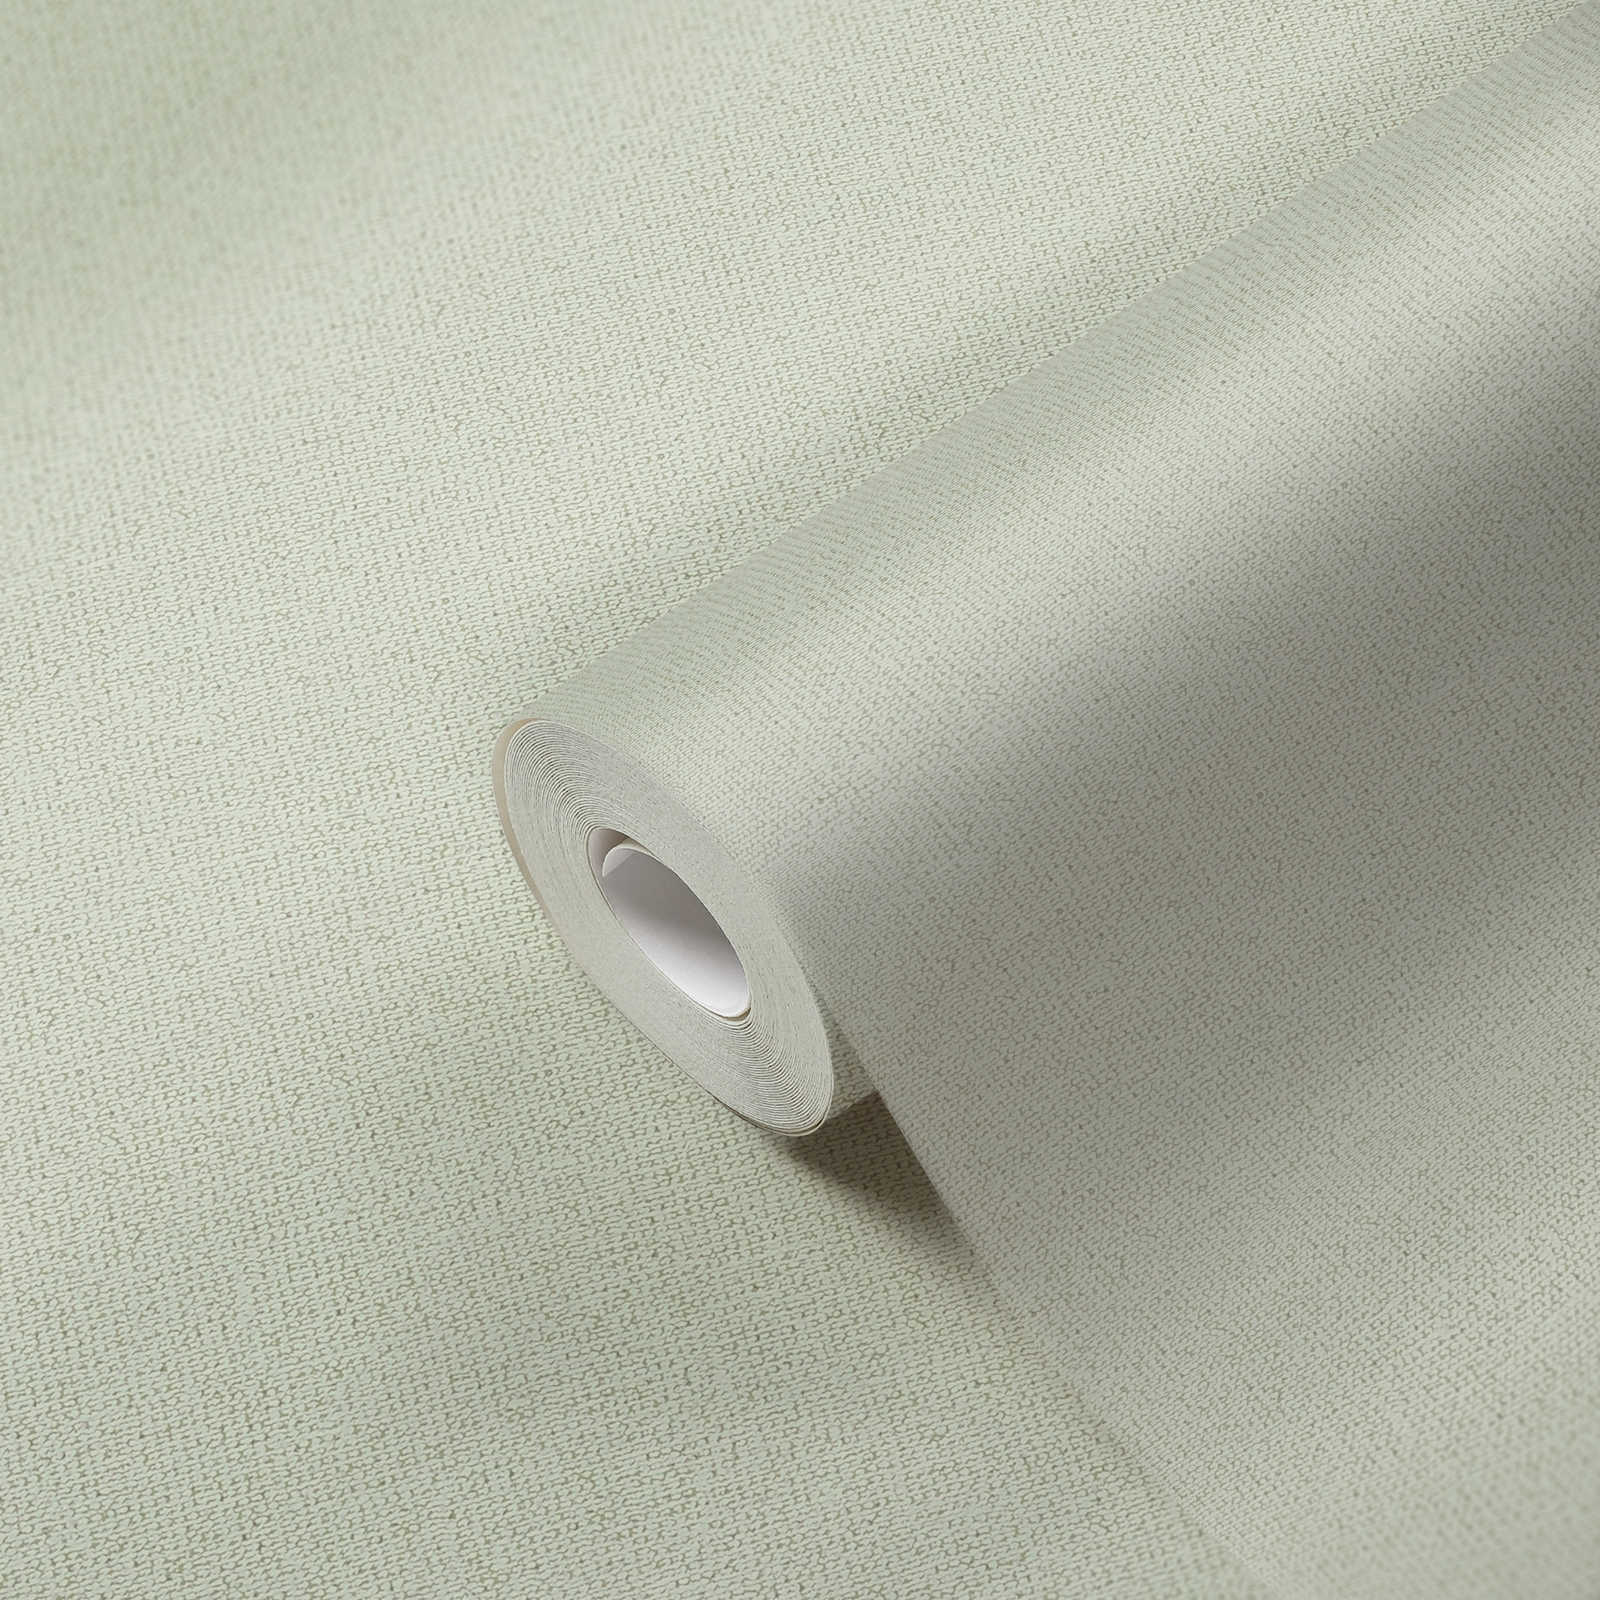             Papier peint intissé chiné mat à structure lin - vert
        